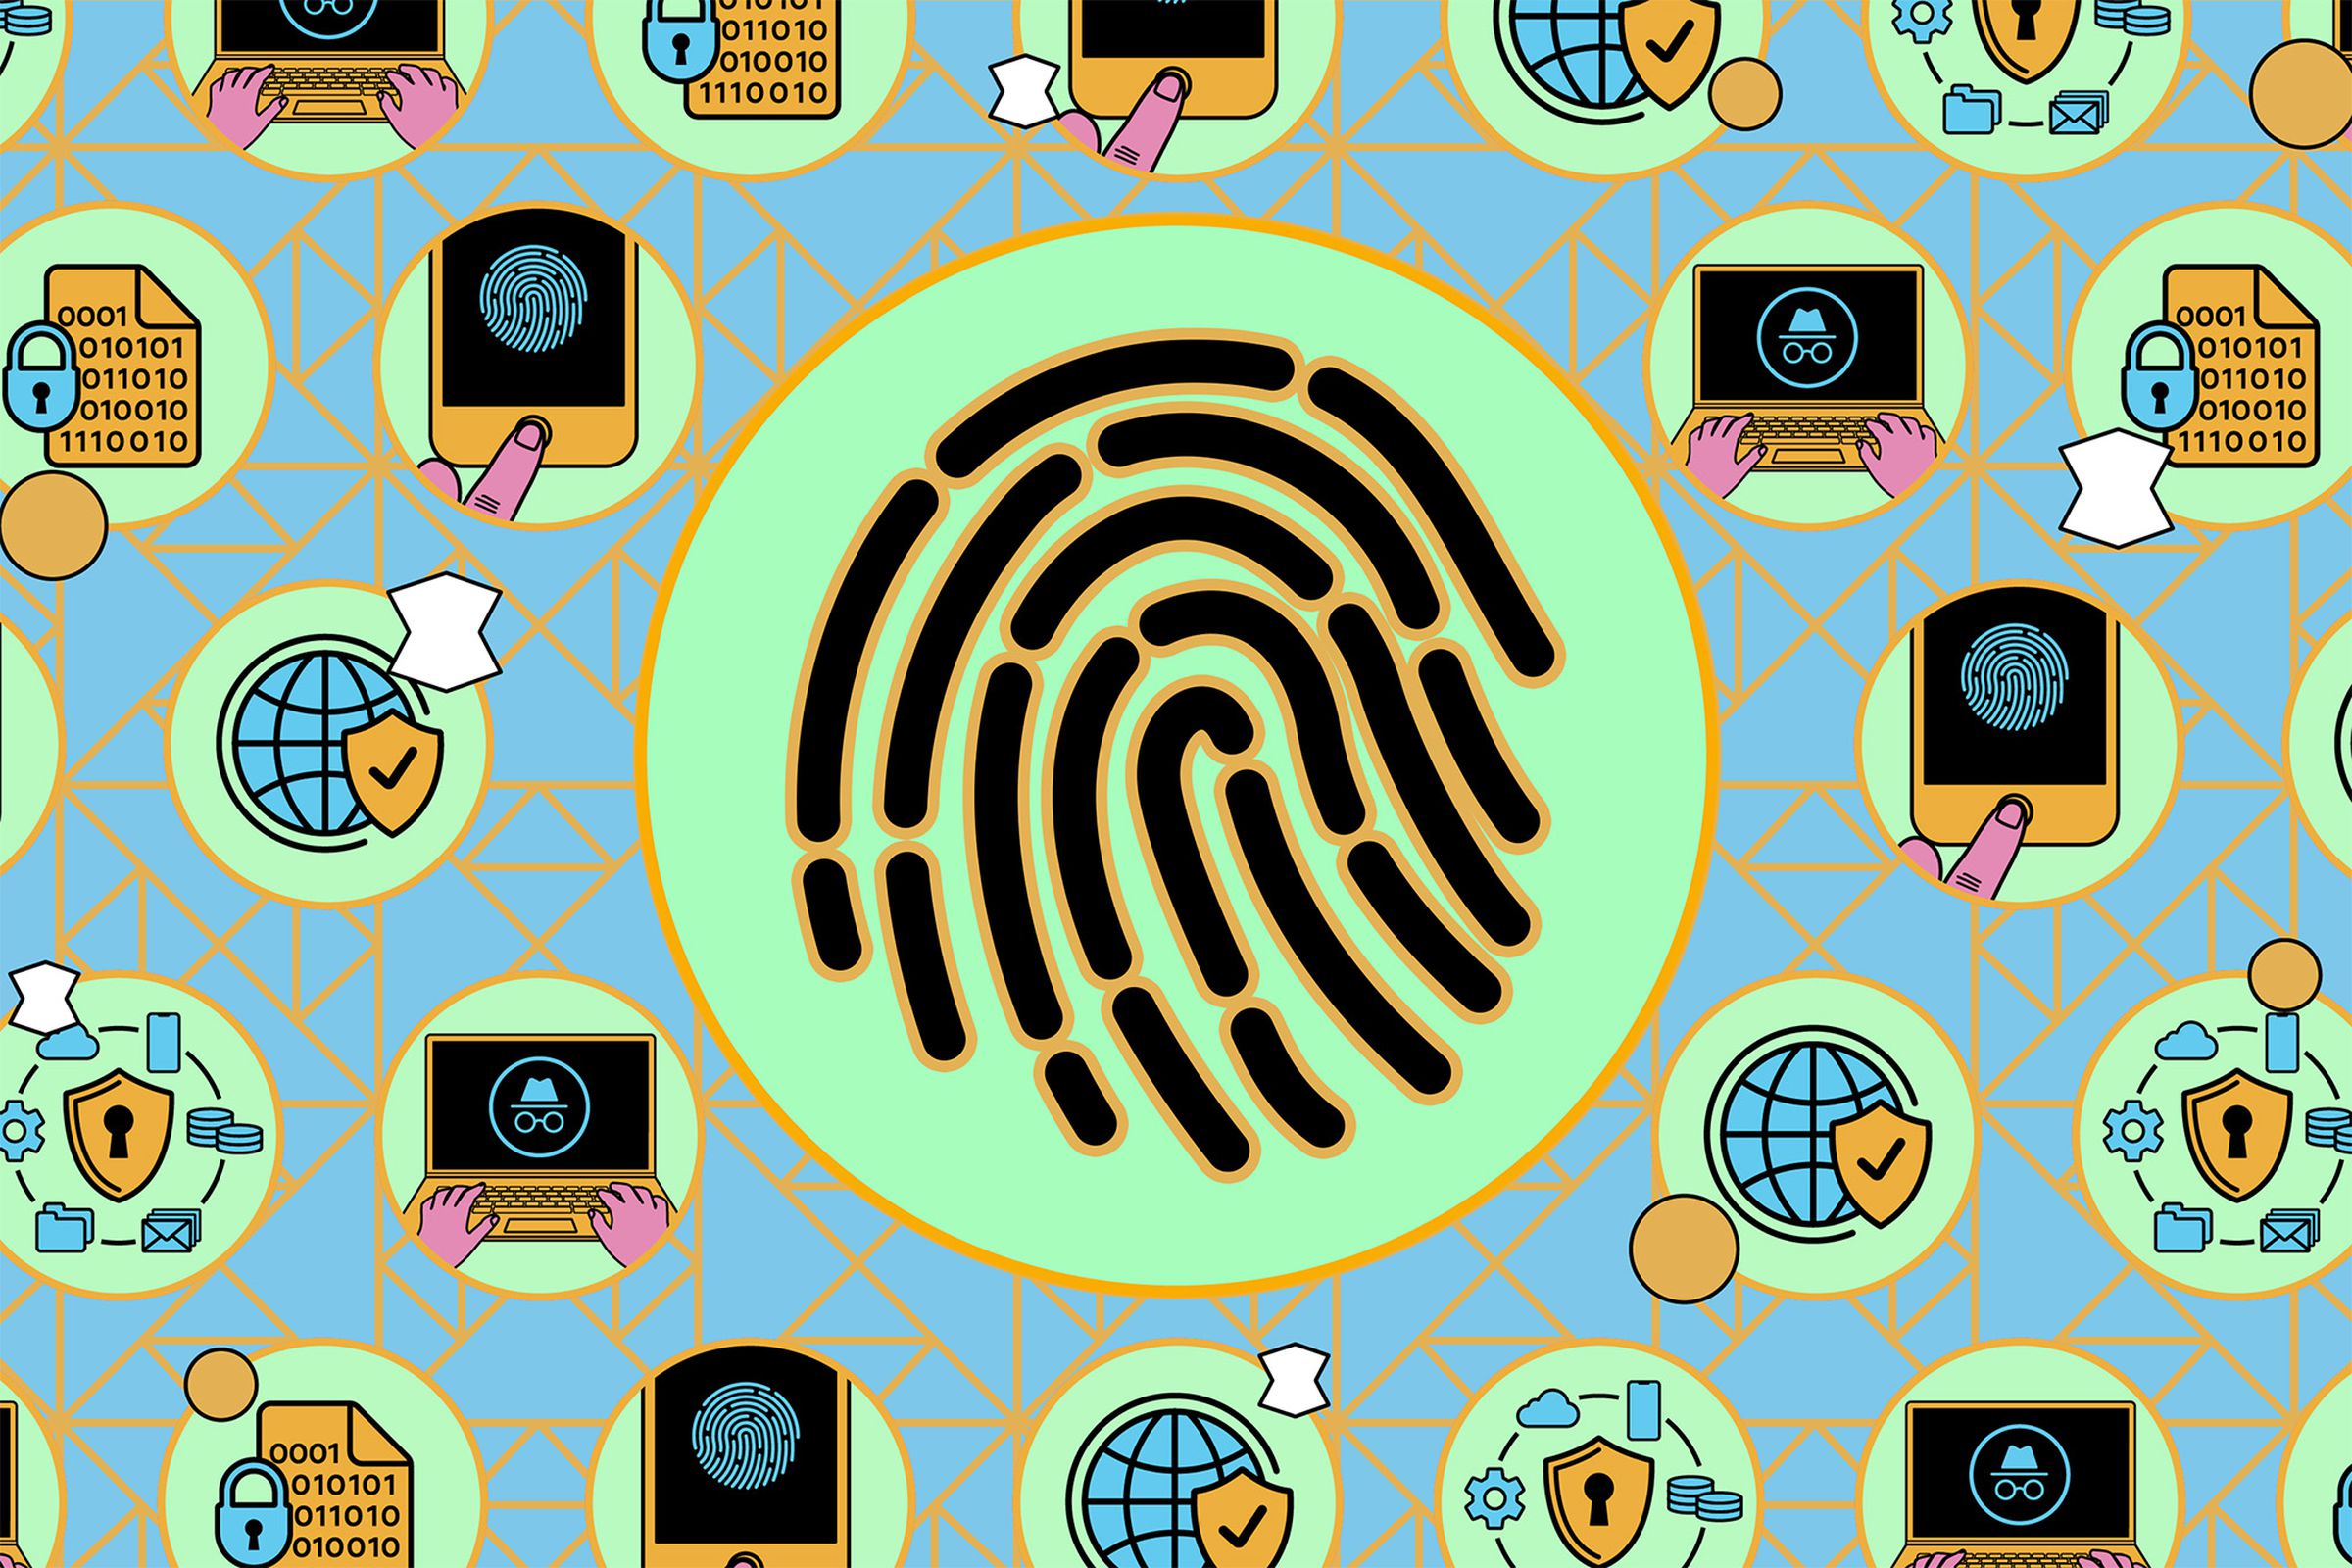 A fingerprint against an illustrated background.